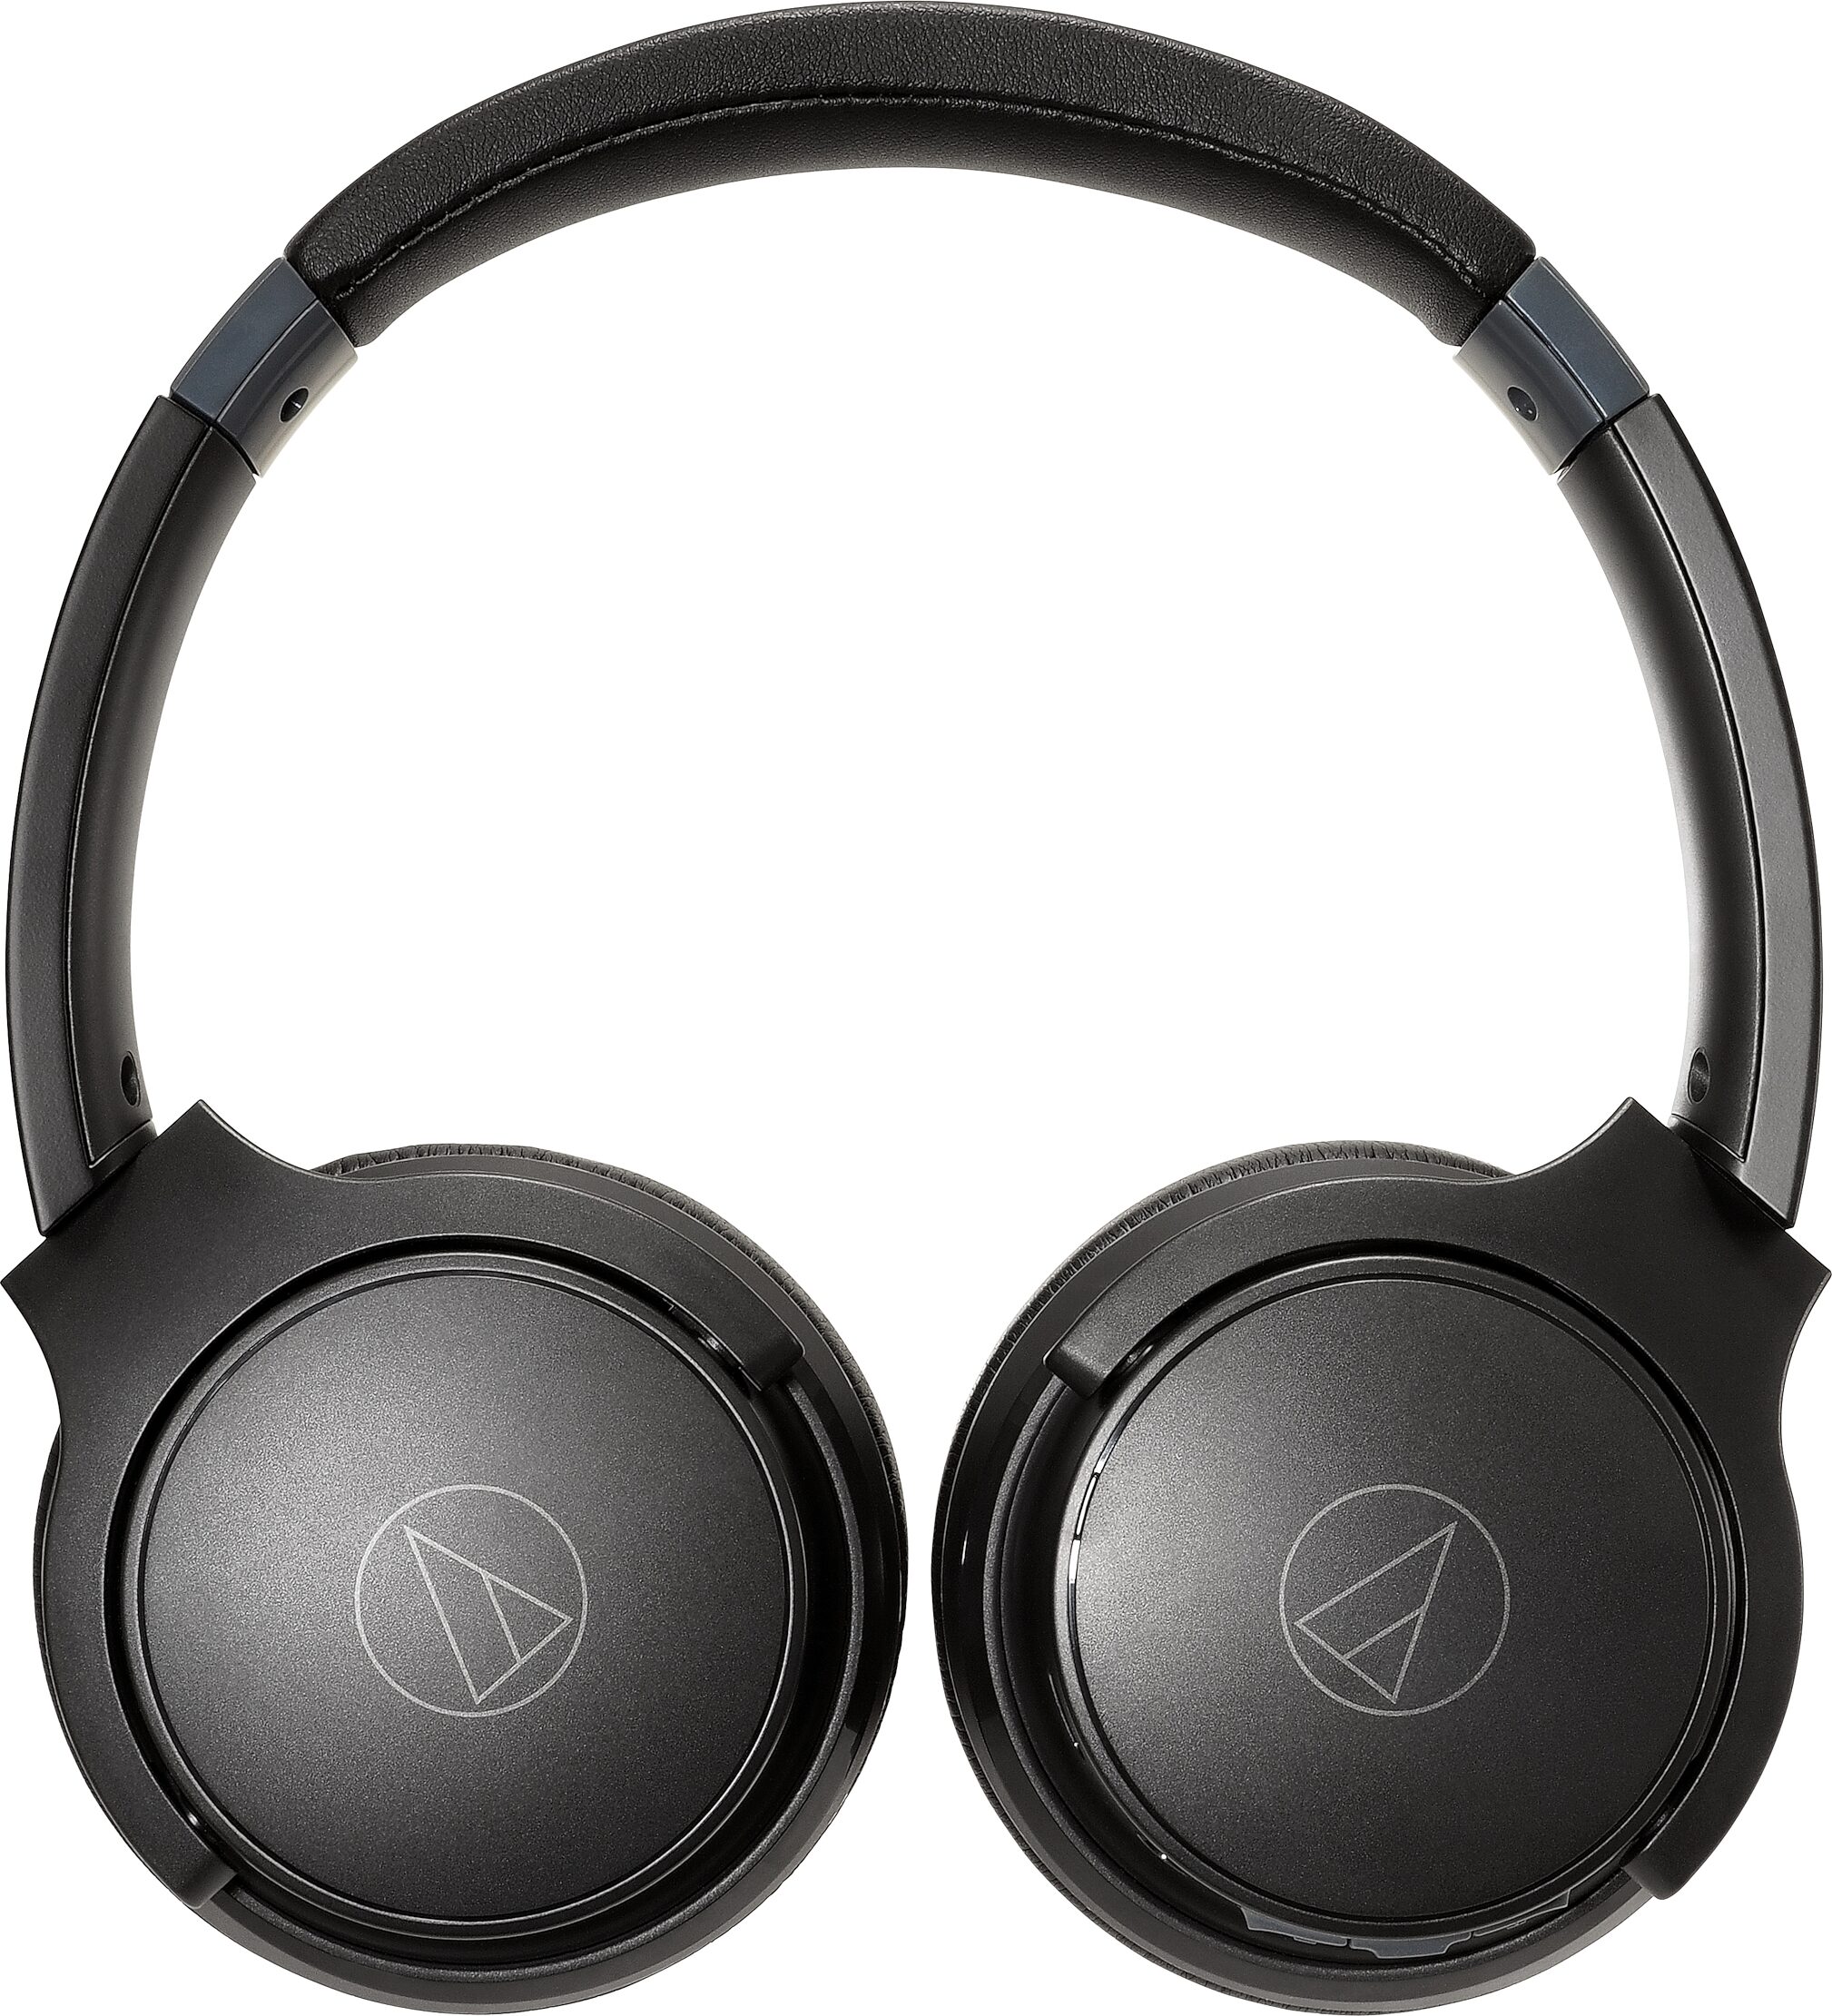 ATH-S220BT Wireless Headphones, Audio-Technica